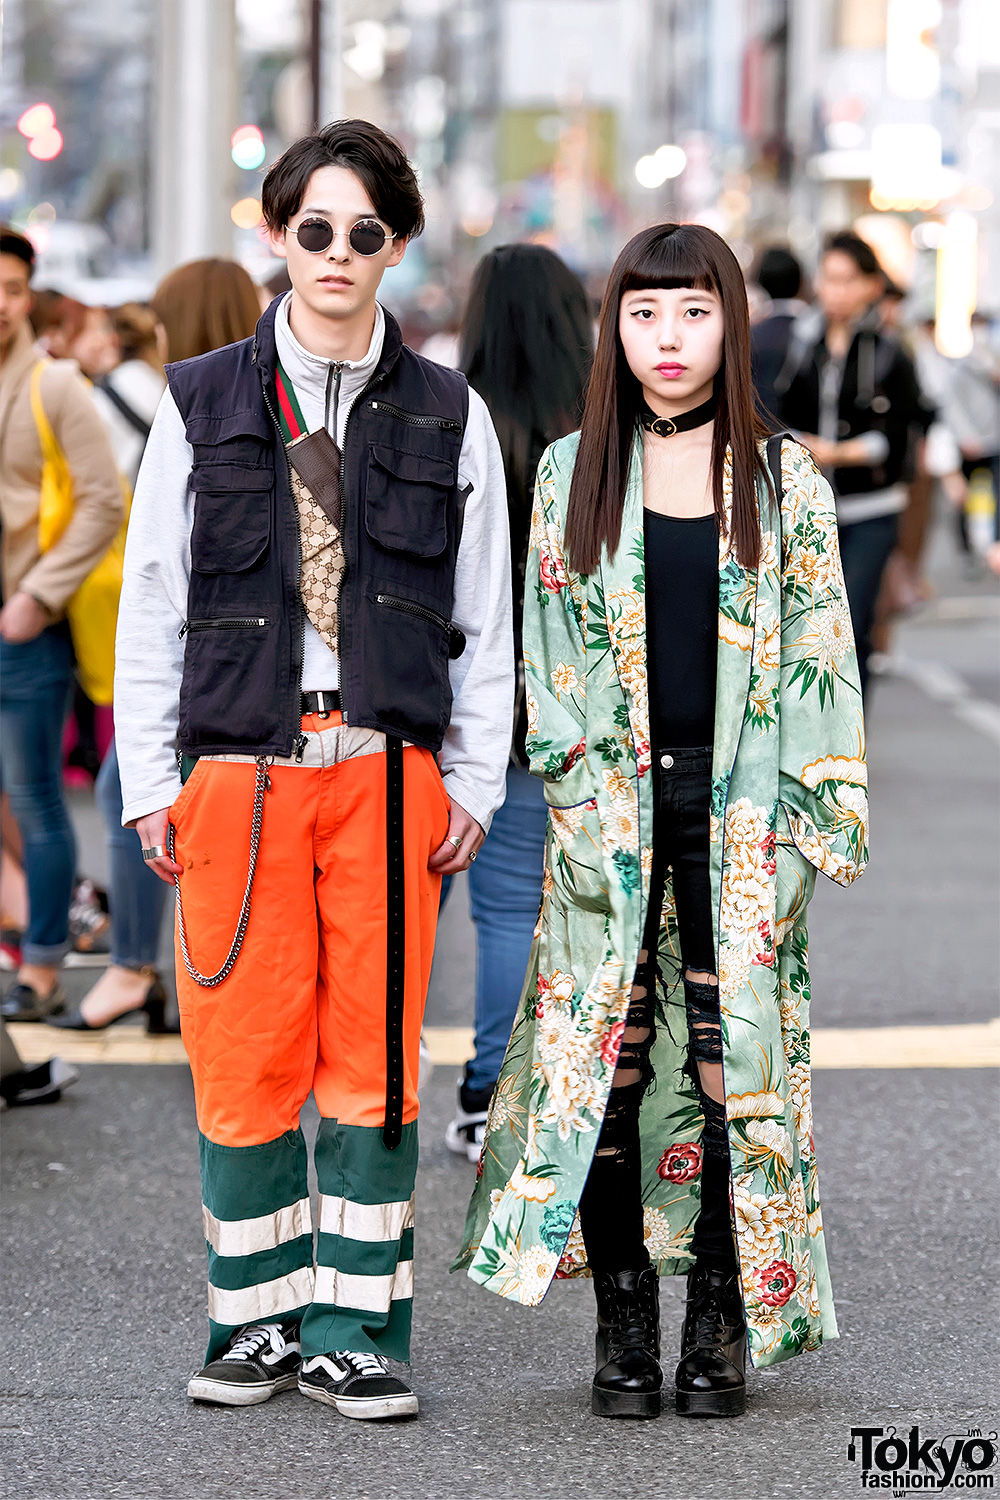 Современности японии. Харадзюку Токио. Кимоно Харадзюку. Харадзюку улица в Токио. Улица Харадзюку мода кимоно.